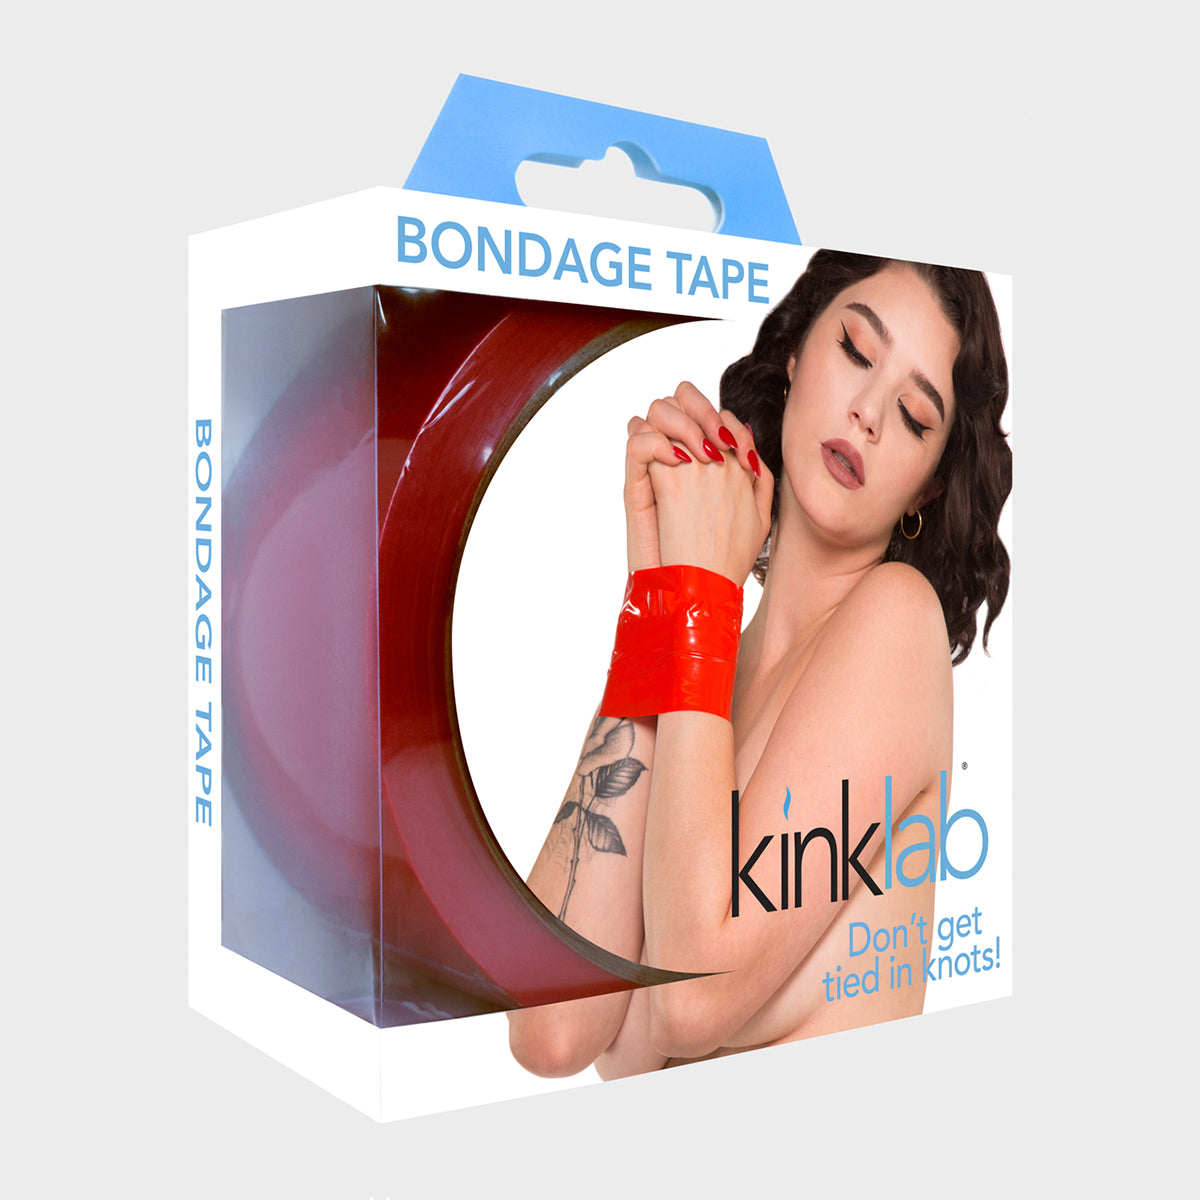 Bondage Tape - Assorted Colors